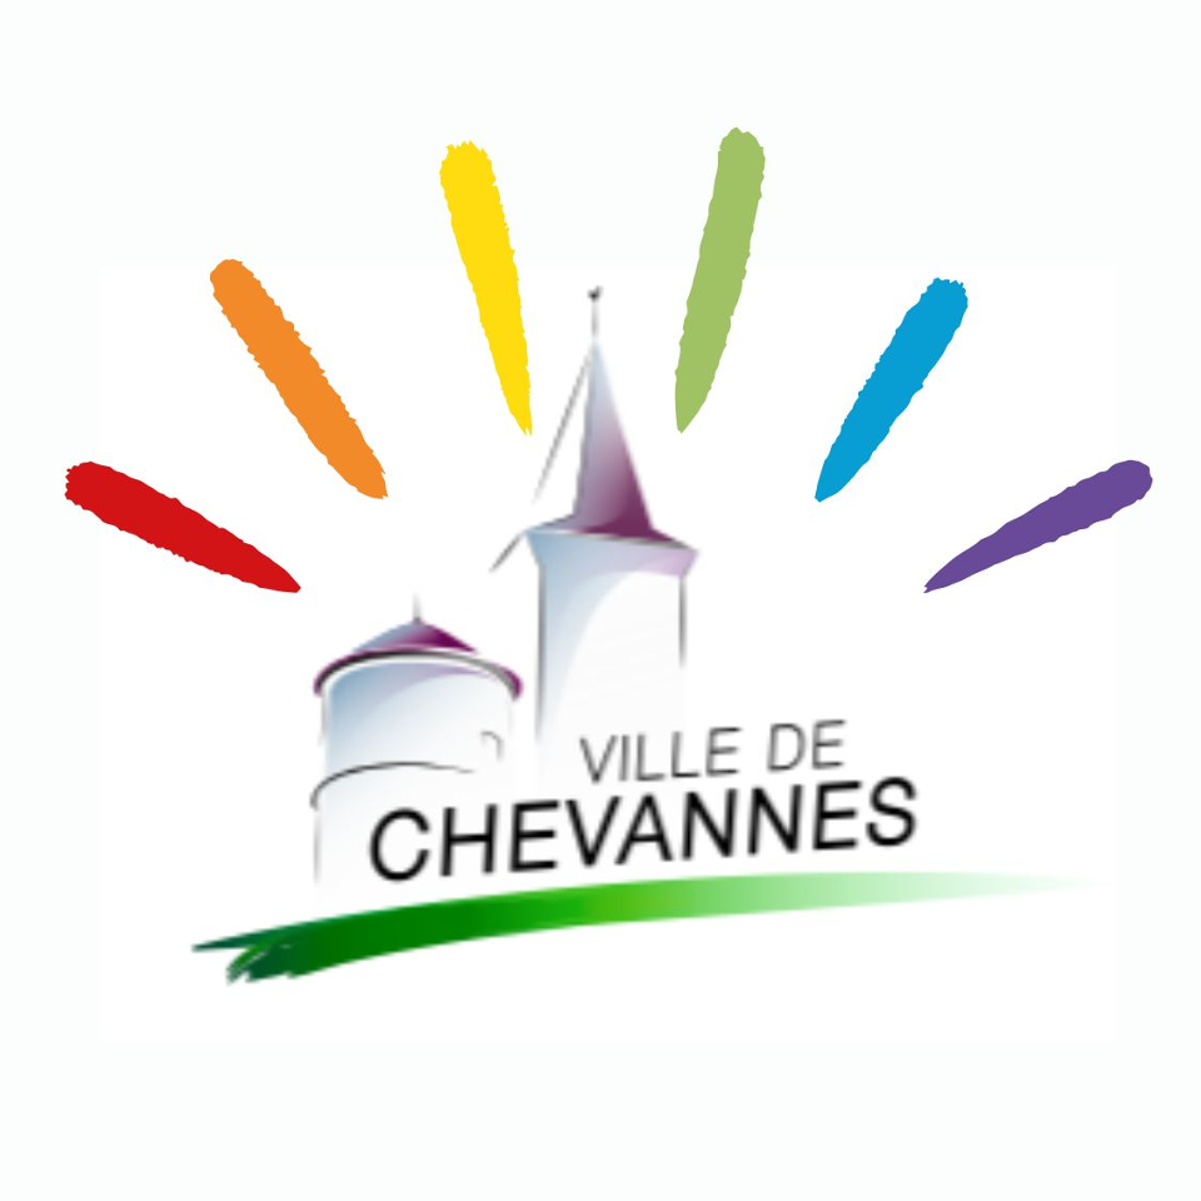 (c) Chevannes.fr